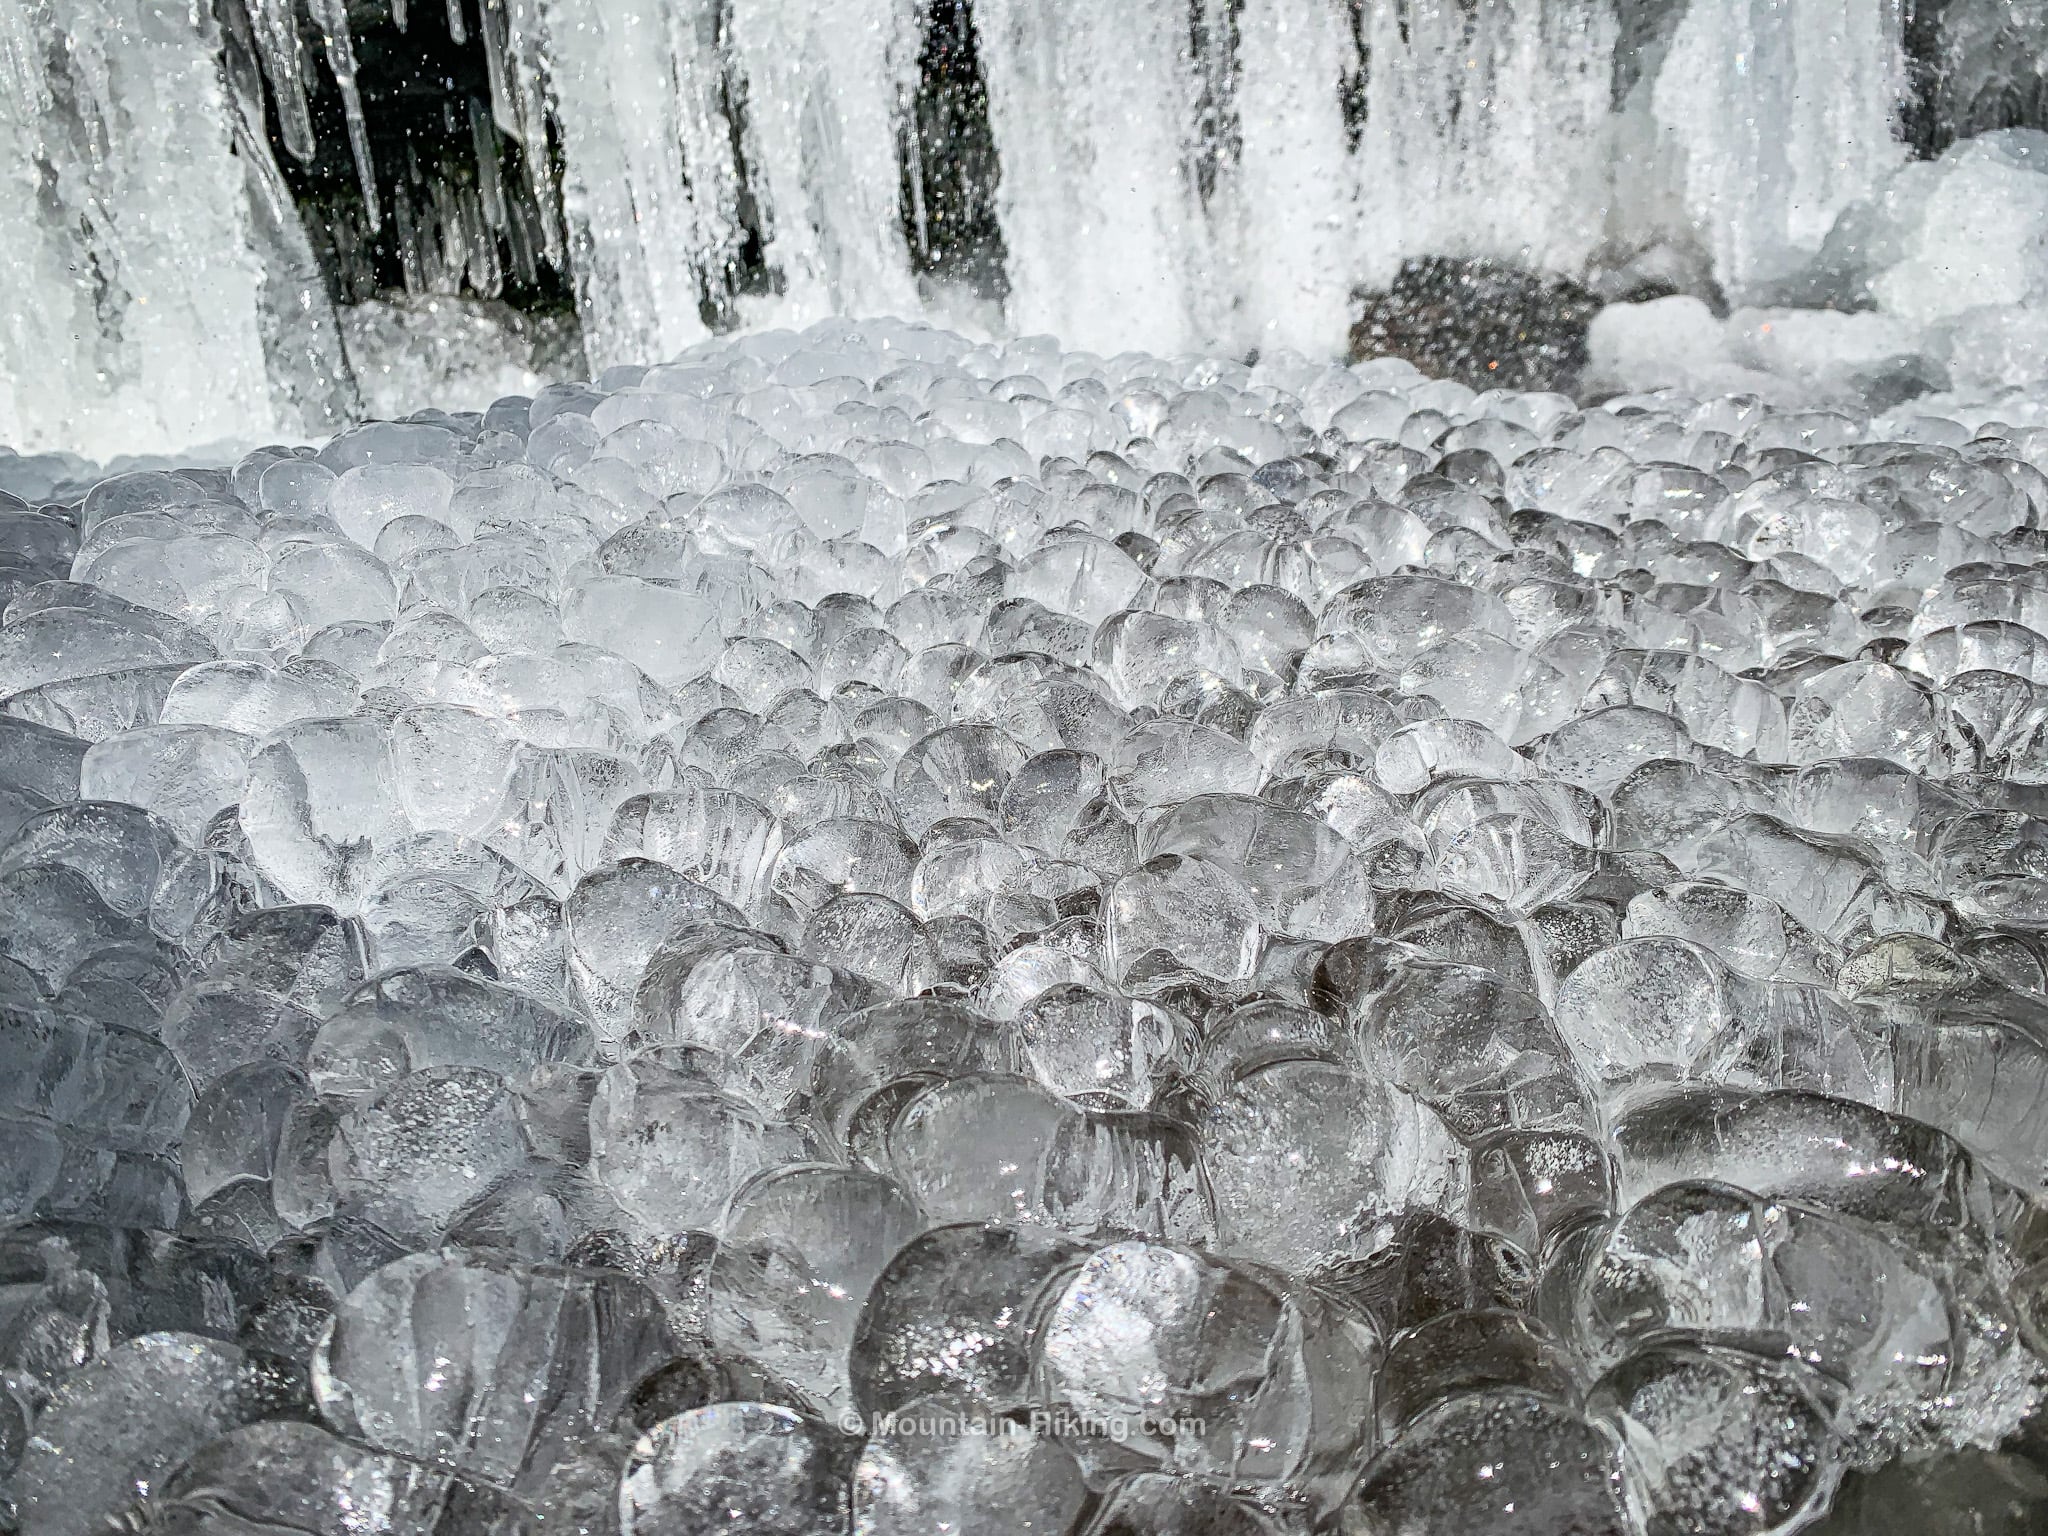 carpet of ice-balls